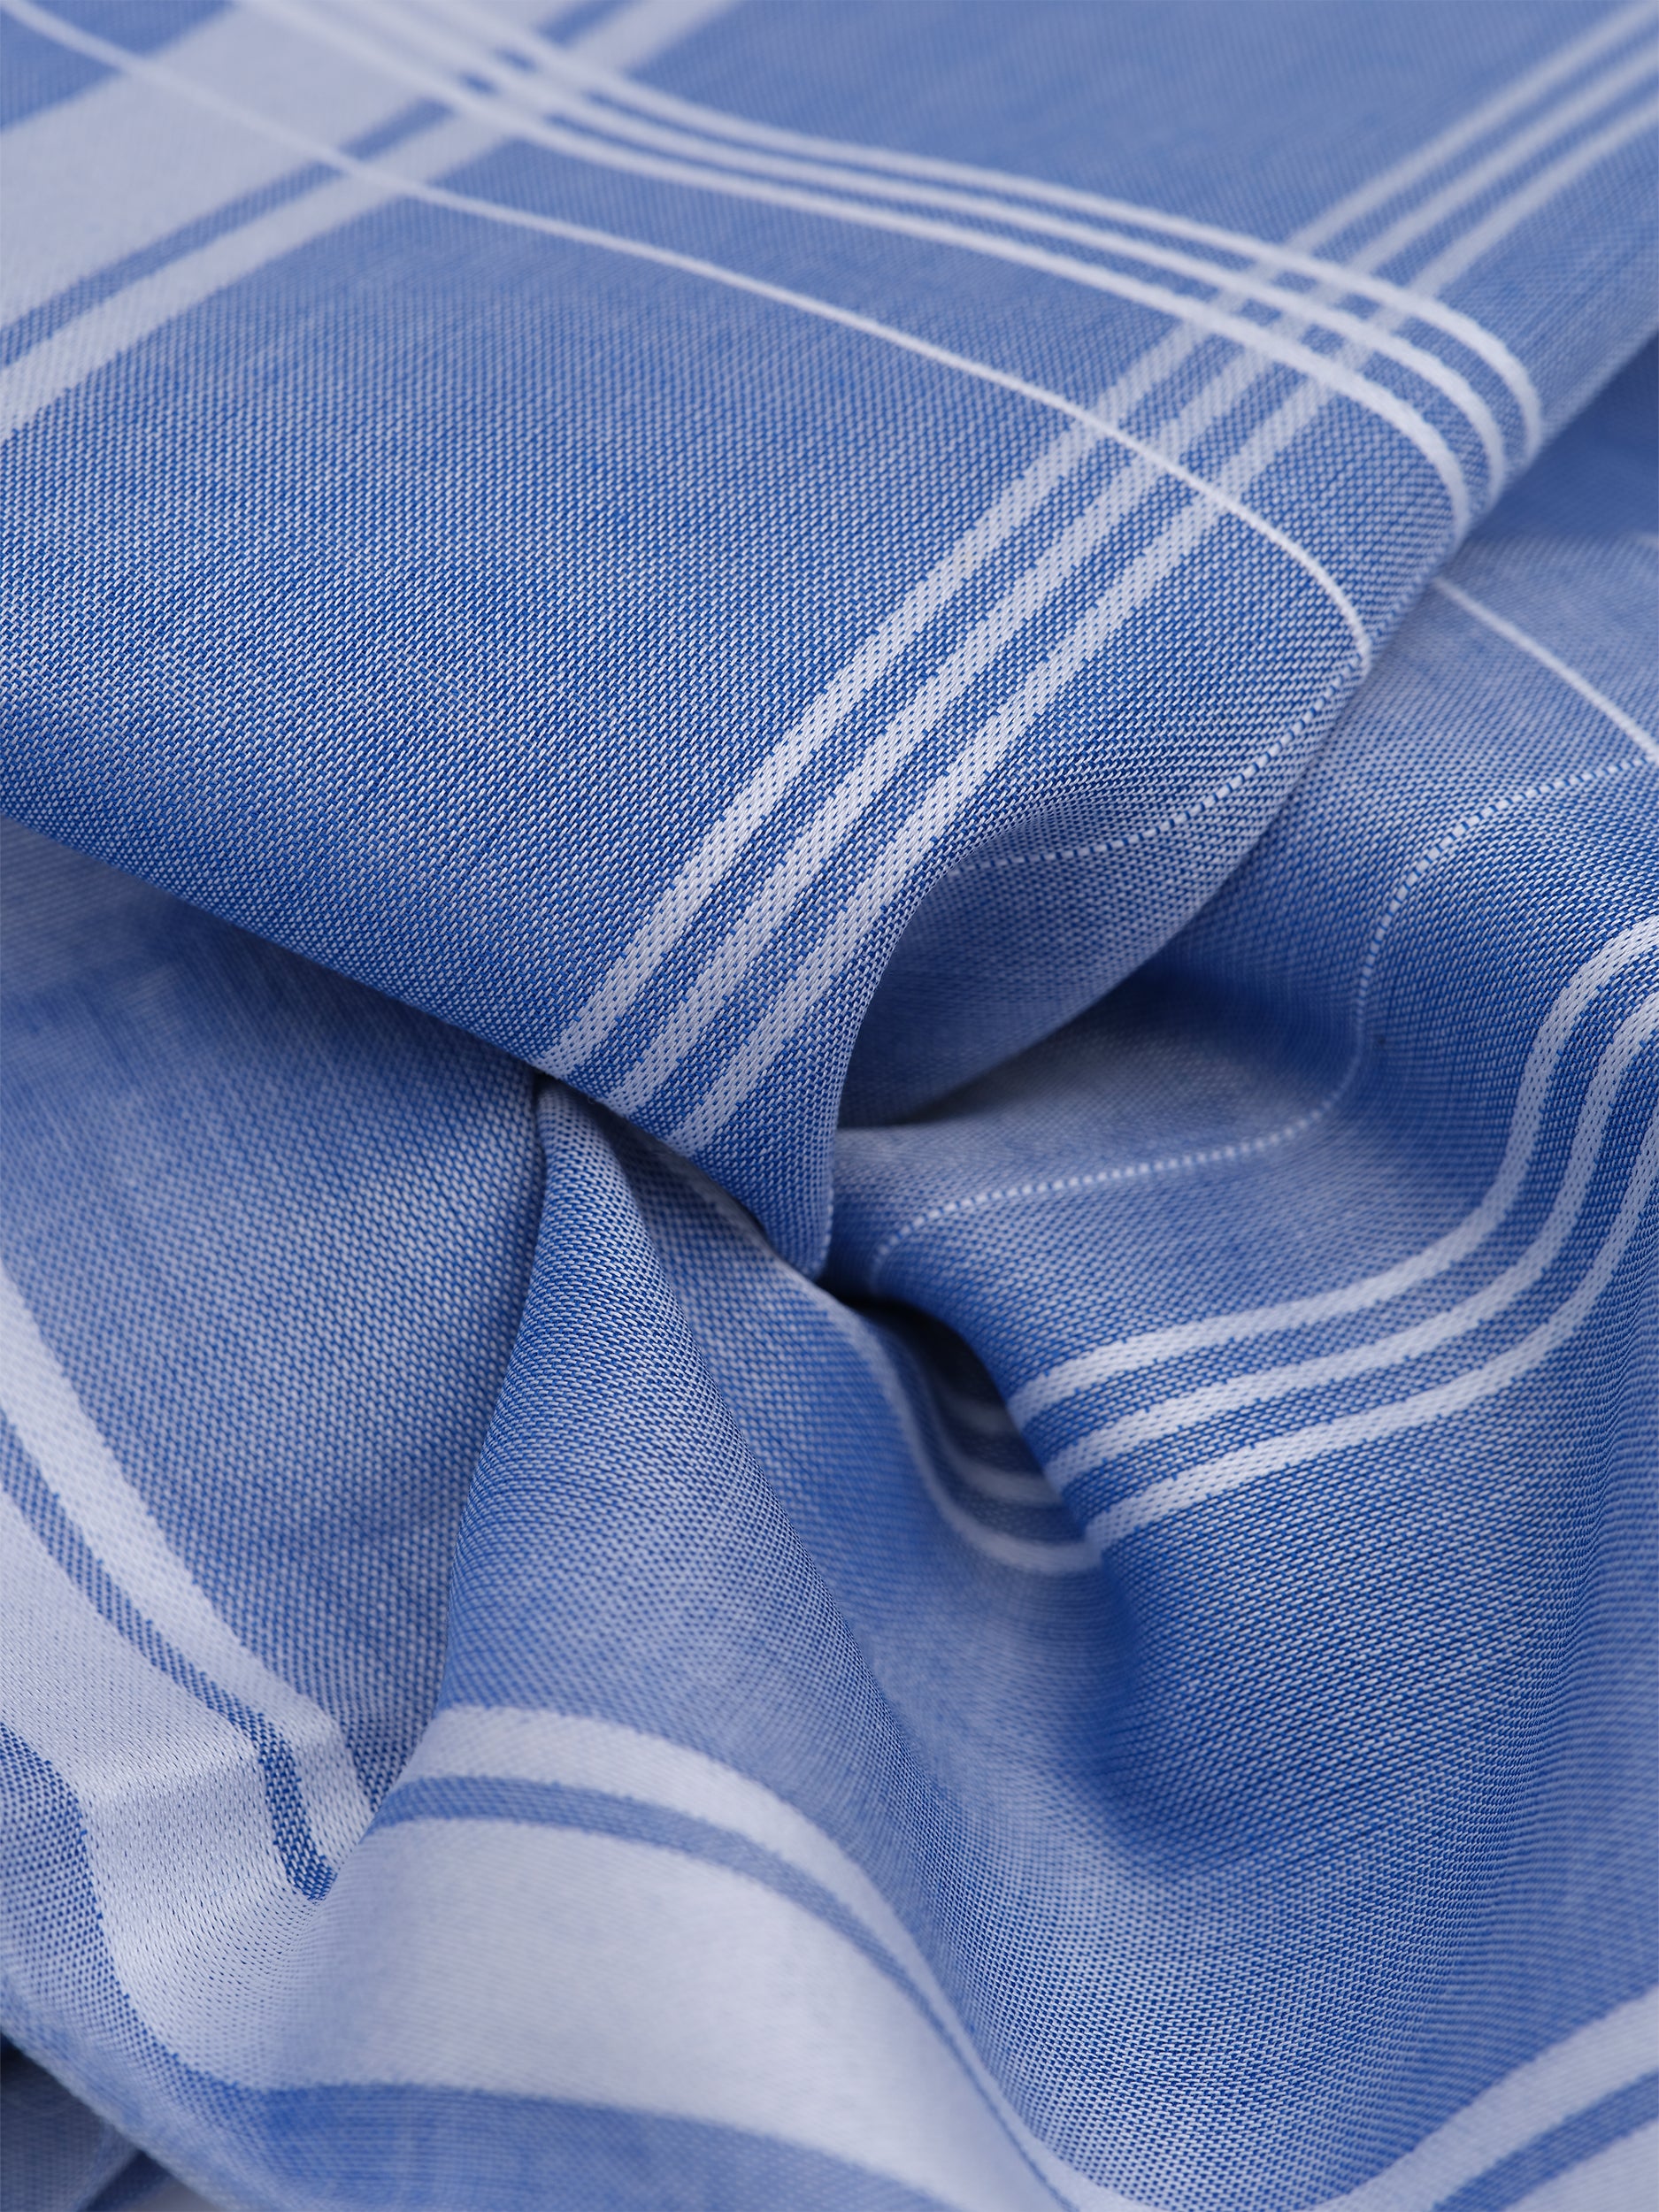 Sarabande Blue Fonce Handkerchief - Oscar Hunt